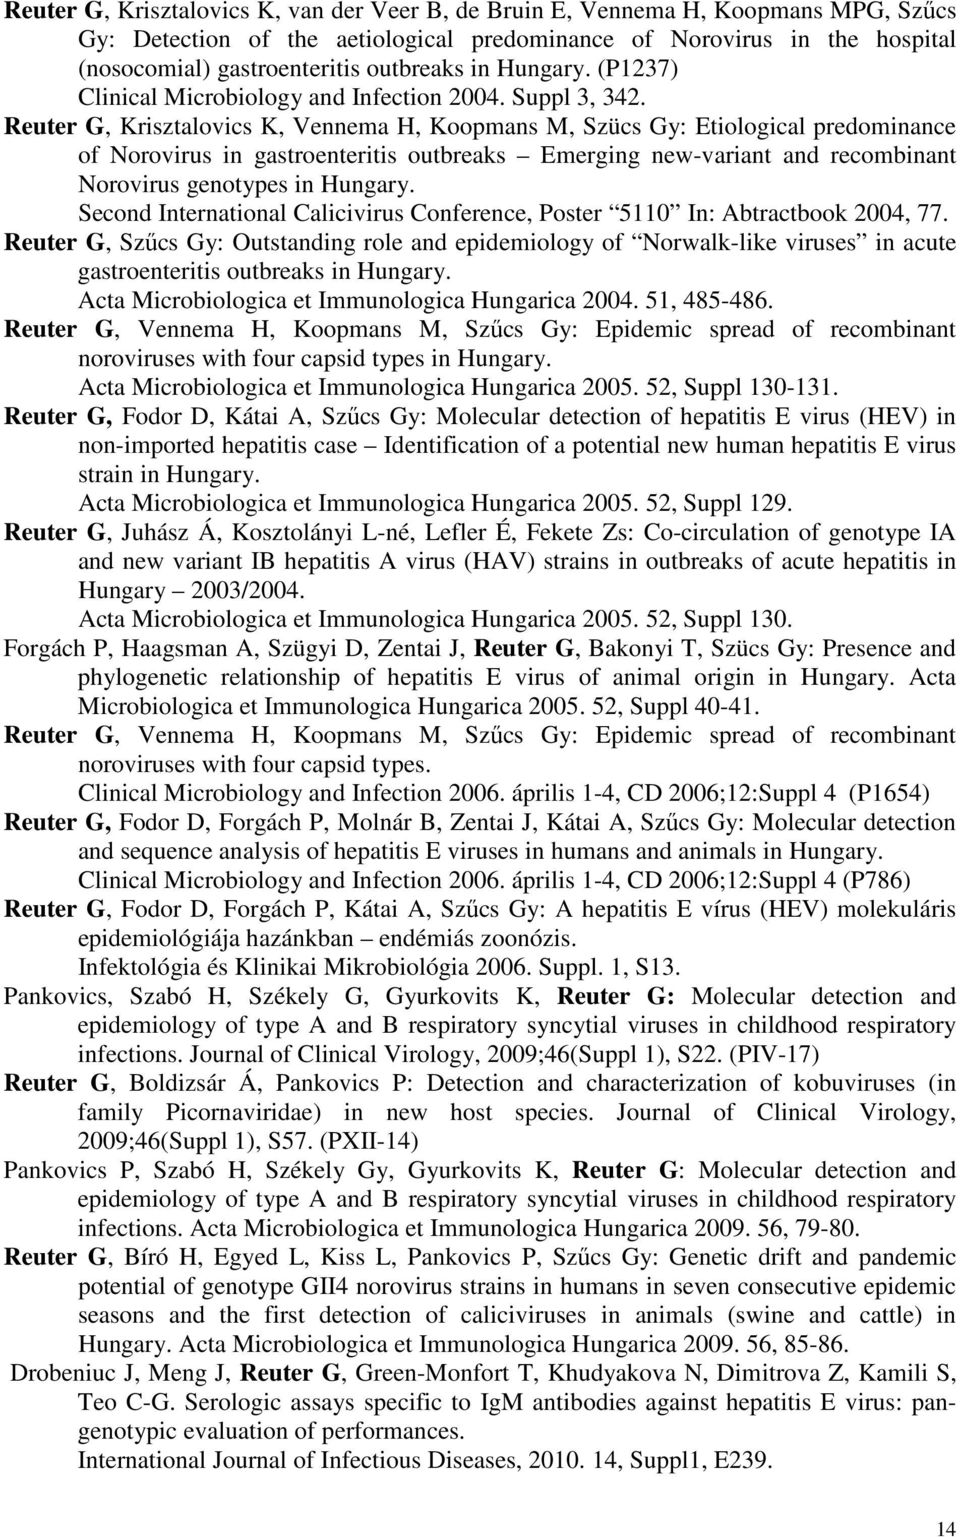 Reuter G, Krisztalovics K, Vennema H, Koopmans M, Szücs Gy: Etiological predominance of Norovirus in gastroenteritis outbreaks Emerging new-variant and recombinant Norovirus genotypes in Hungary.